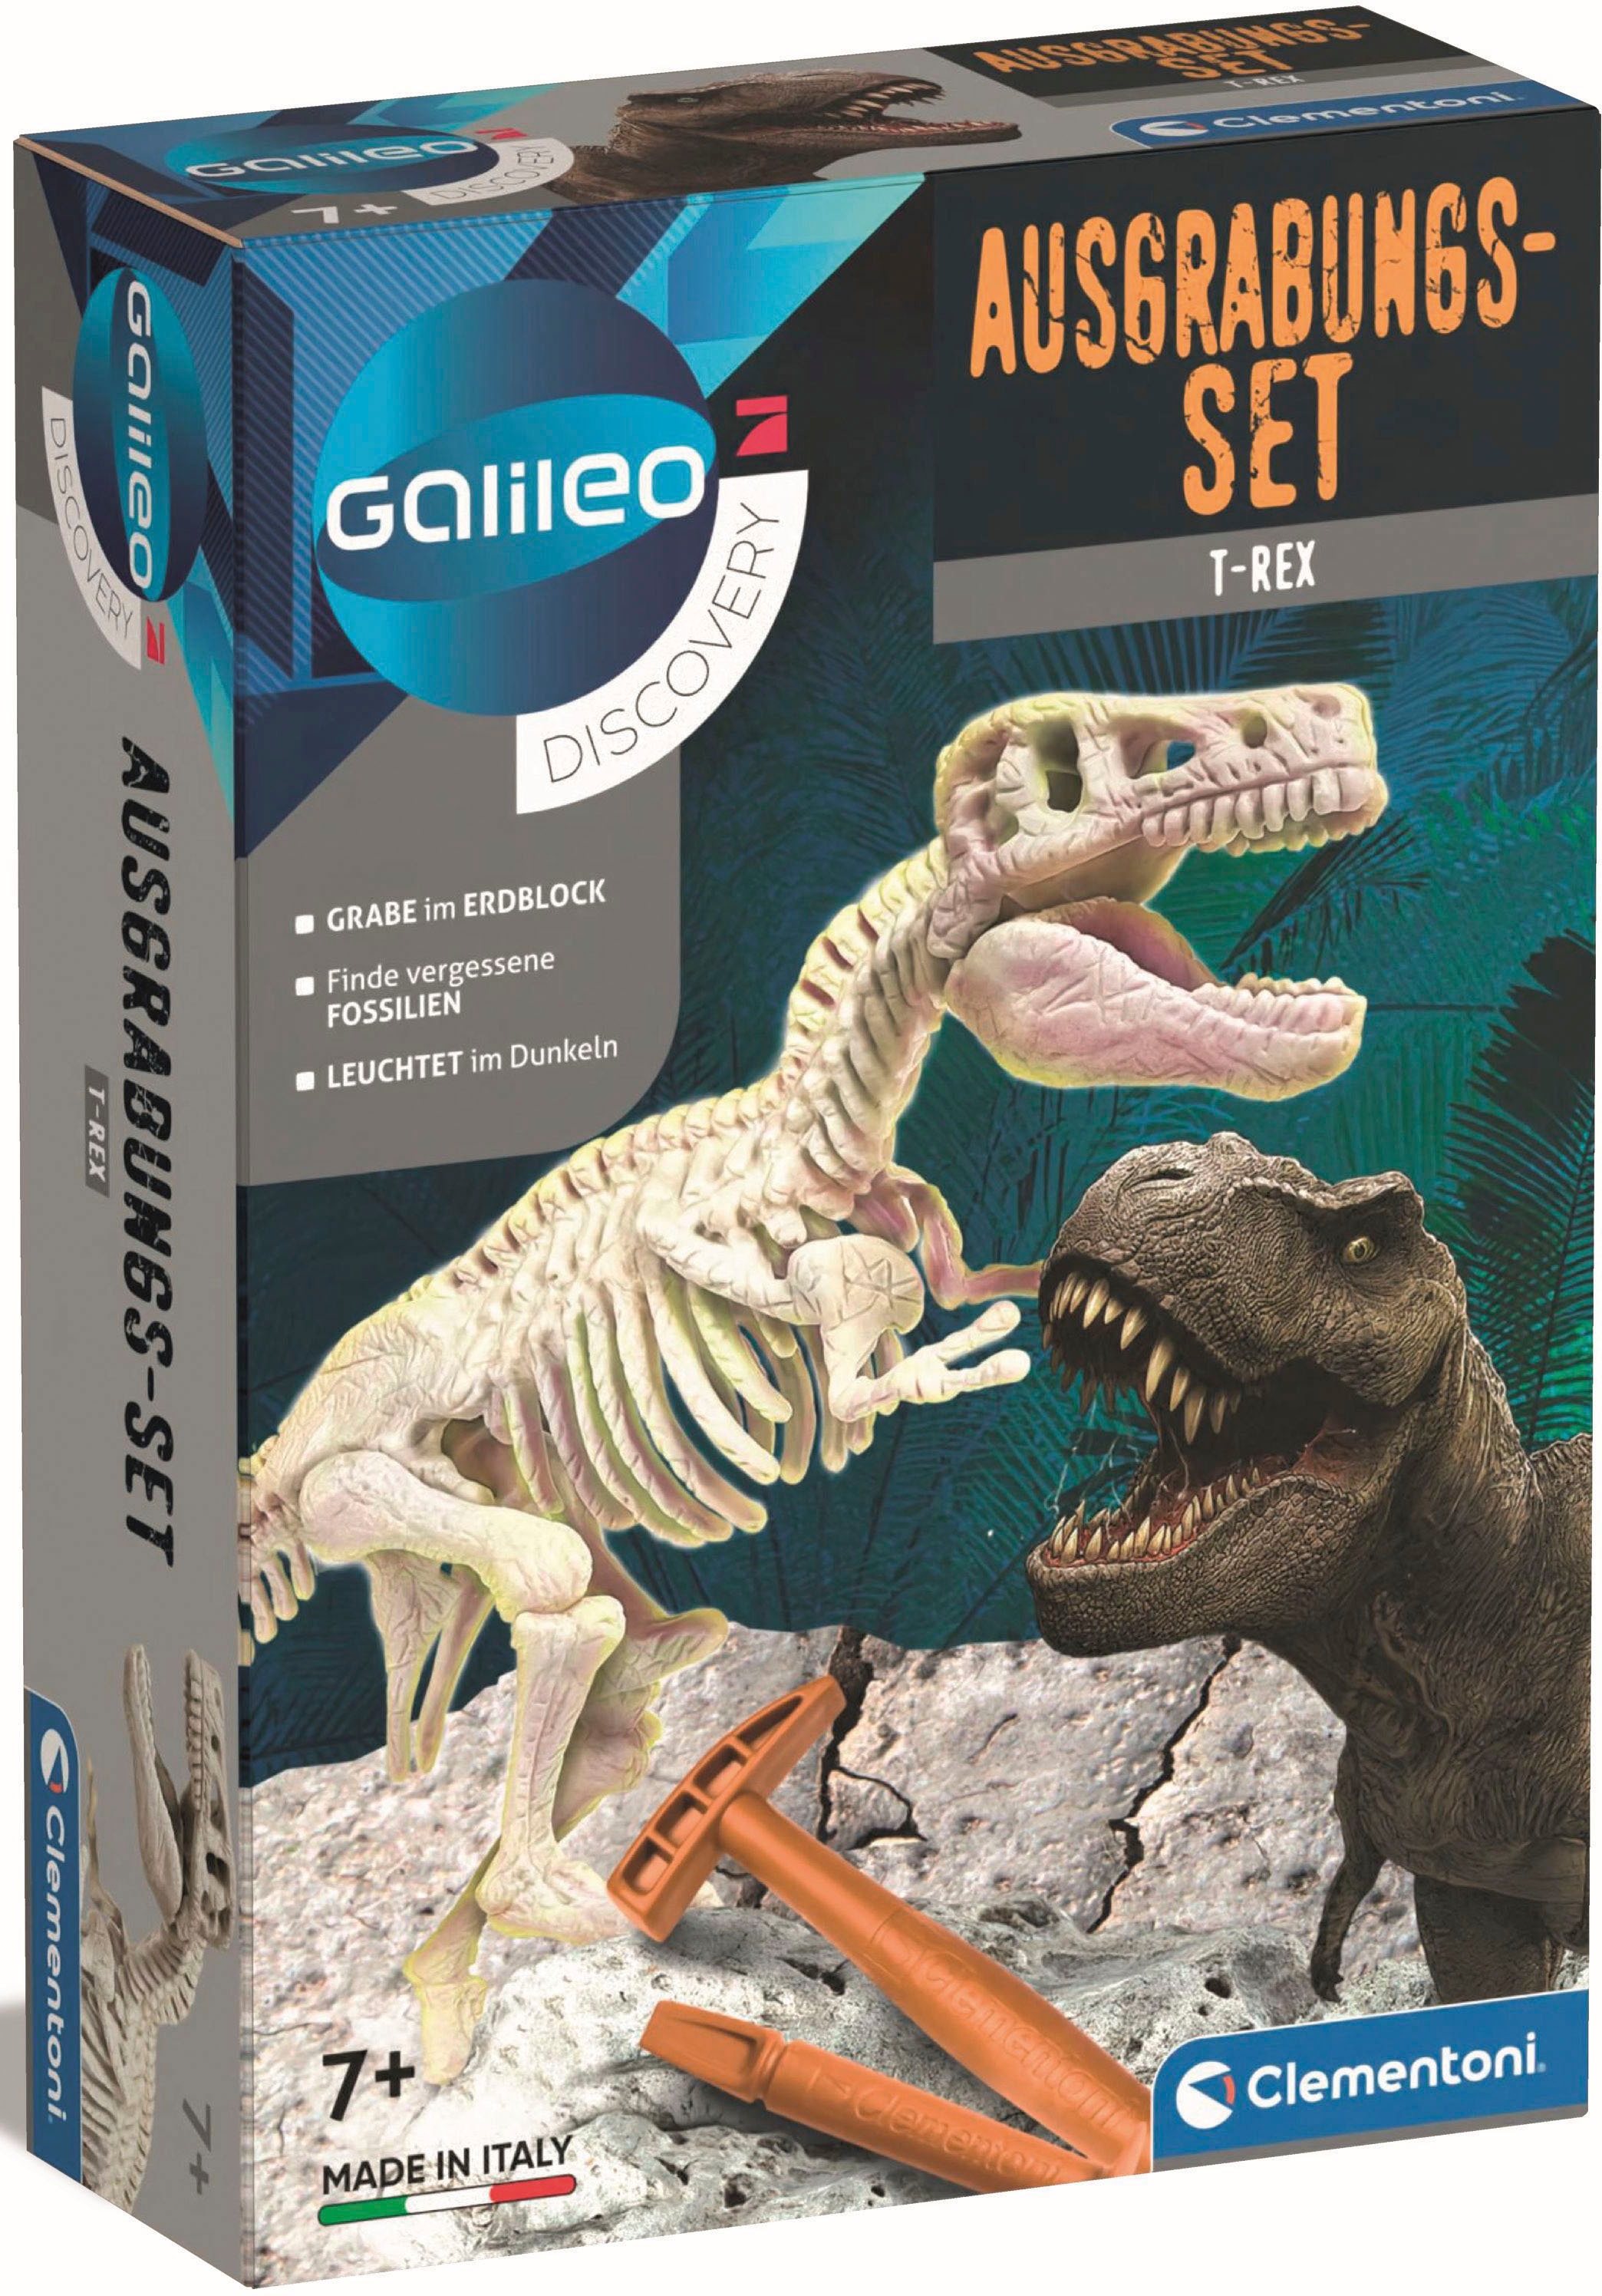 Clementoni® Experimentierkasten »Galileo, Ausgrabungs-Set T-Rex«, Made in Europe